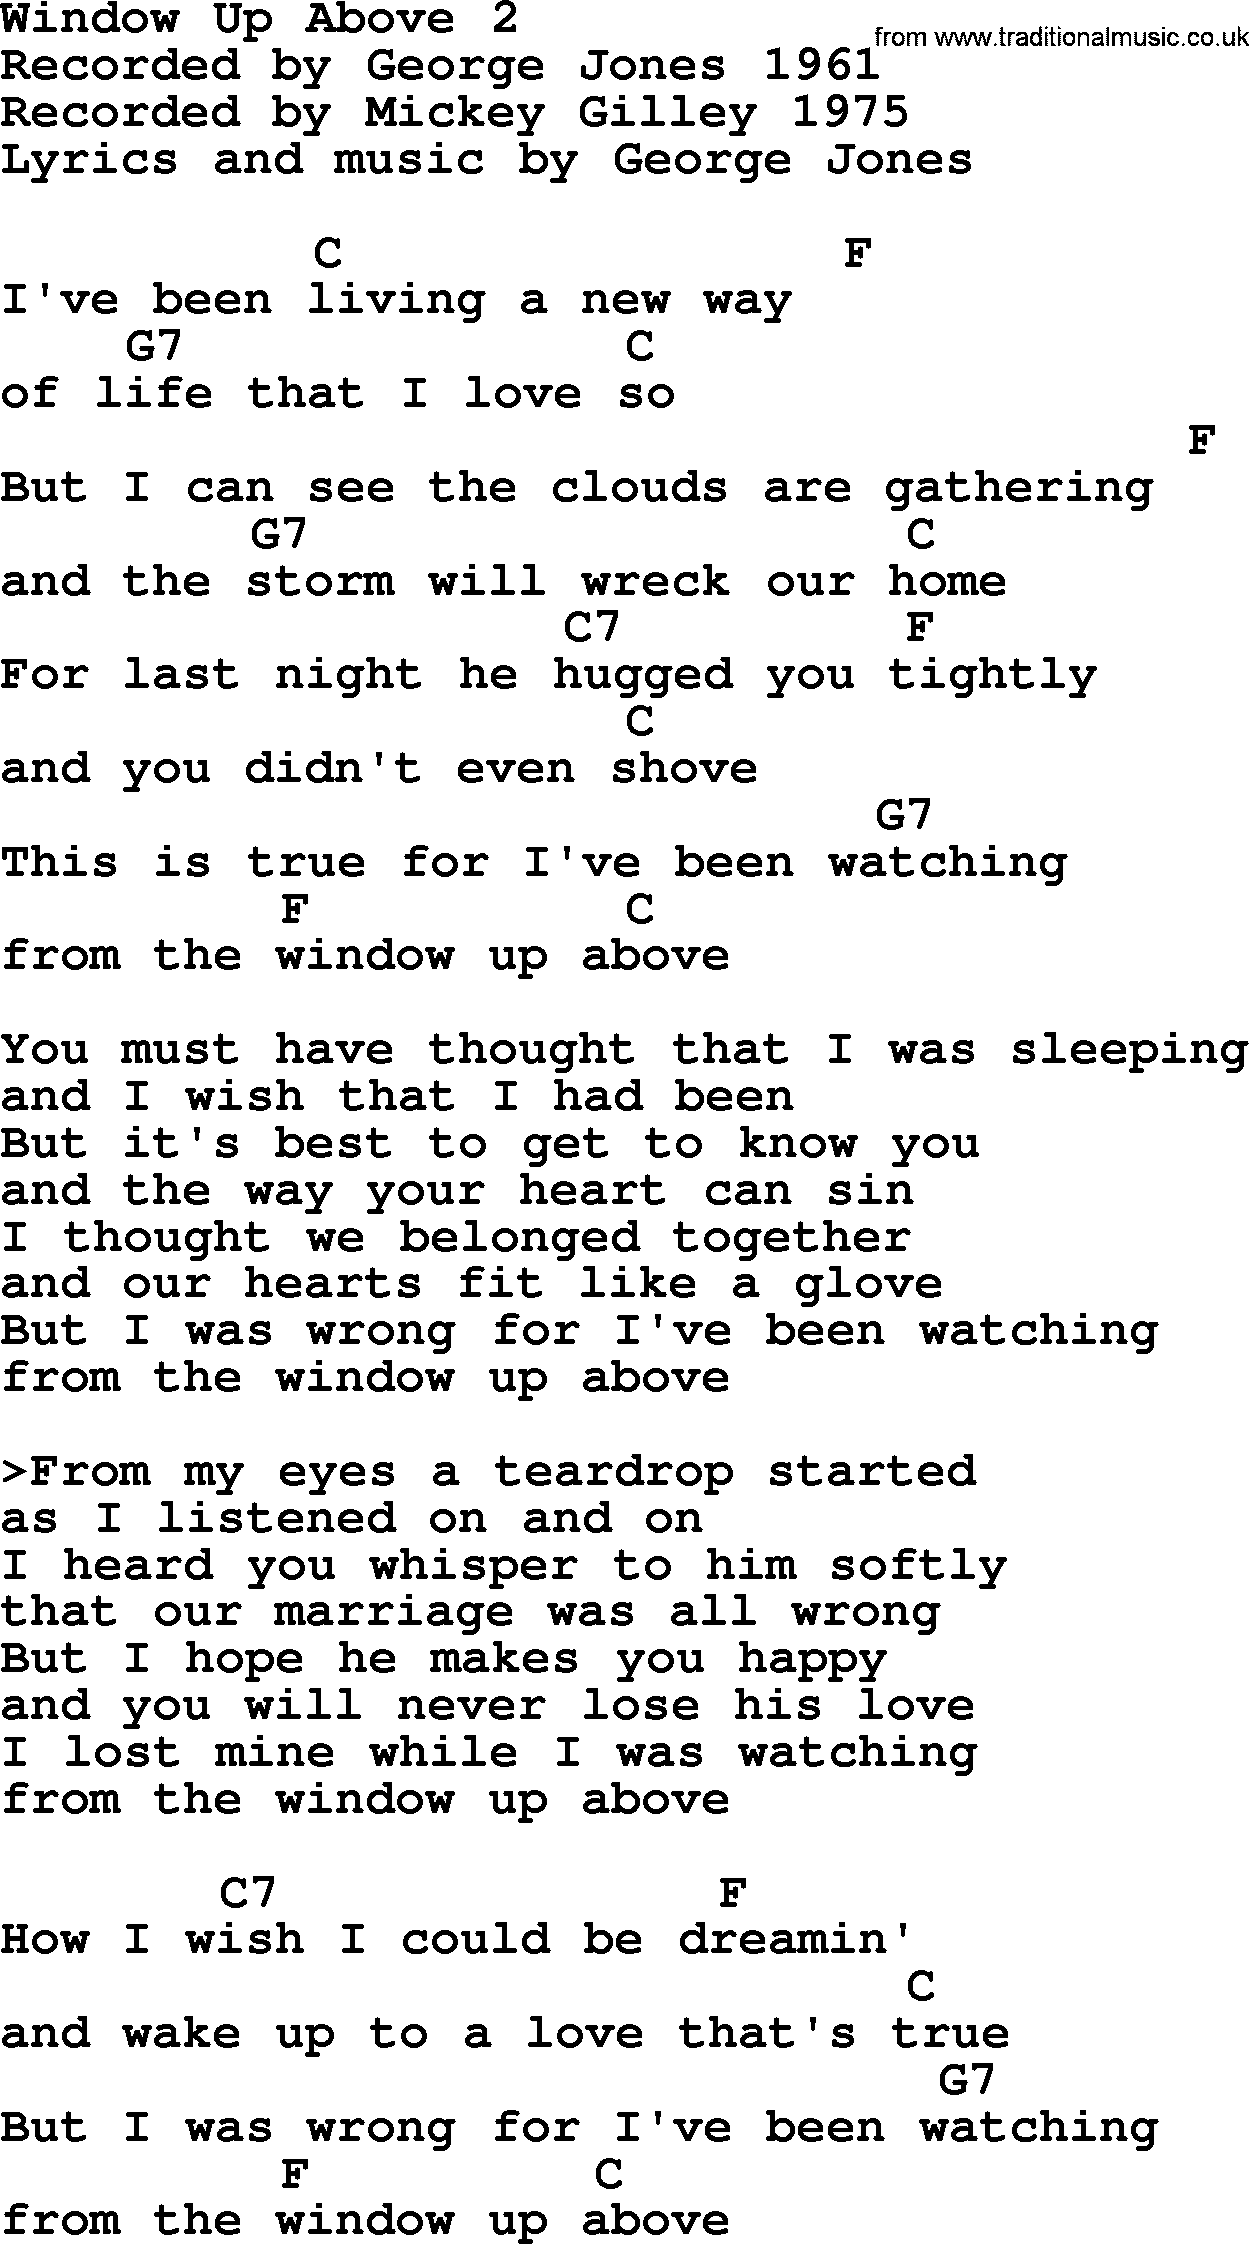 George Jones song: Window Up Above 2, lyrics and chords